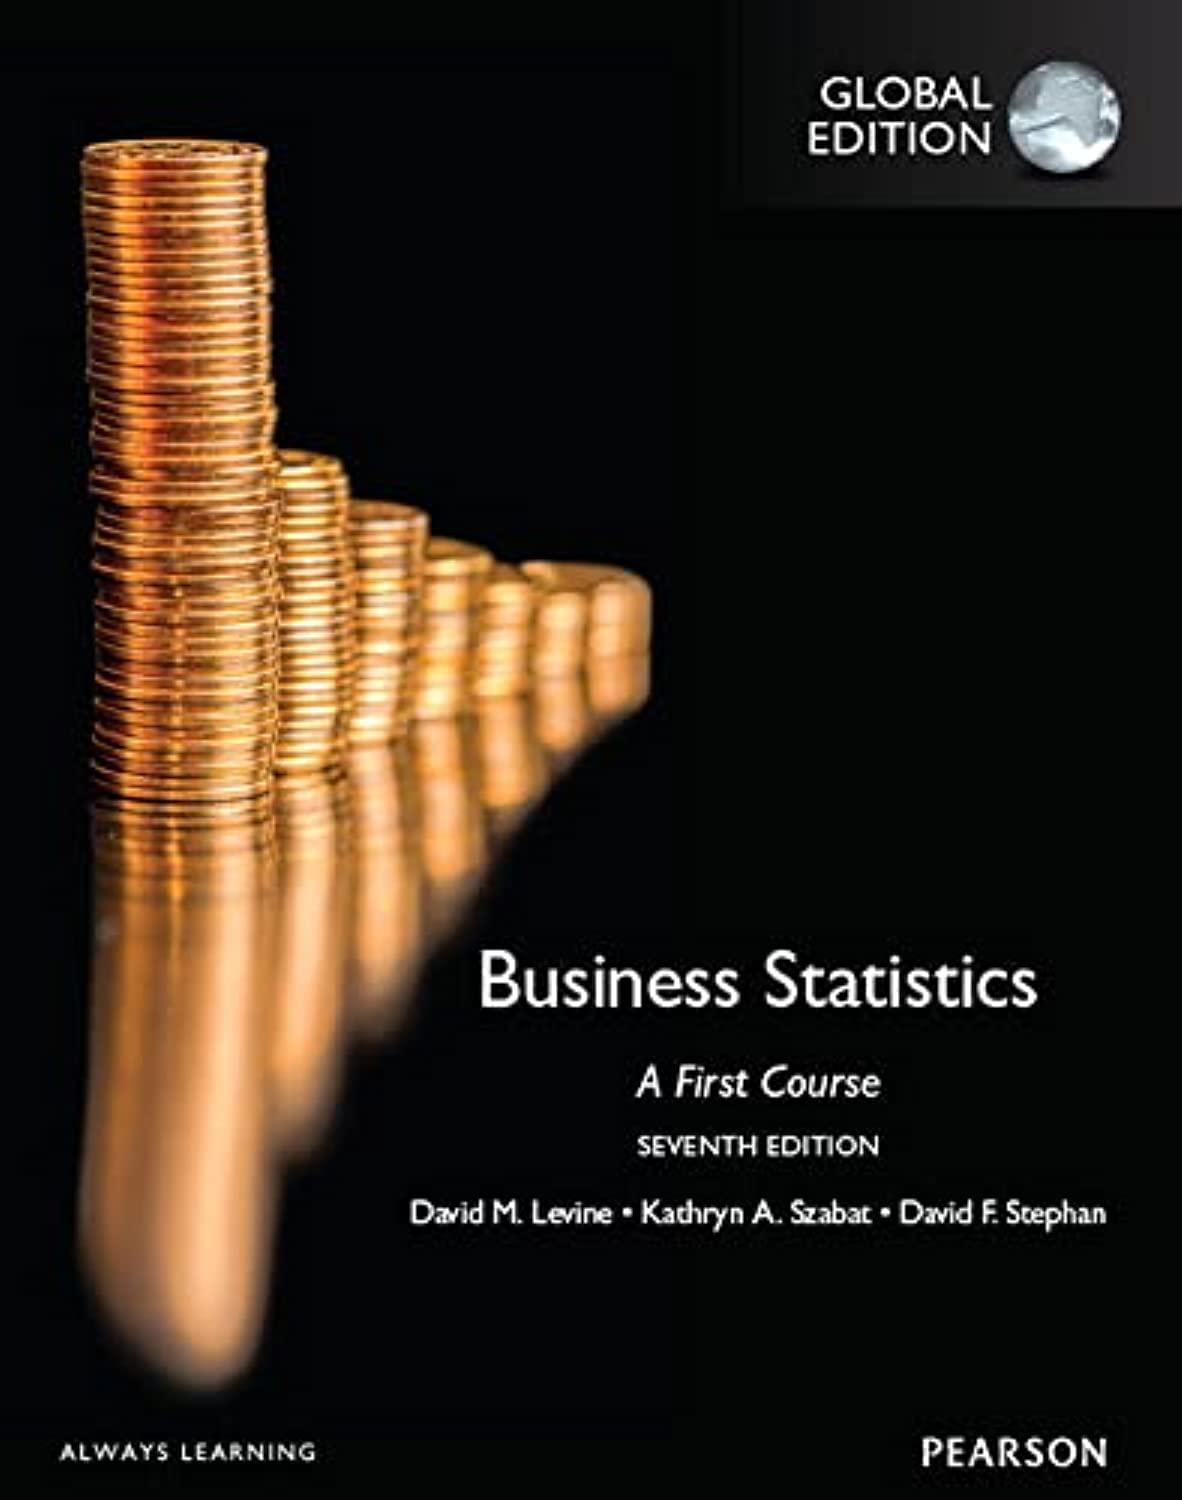 business statistics a first course 7th global edition kathryn a. szabat, david m. levine, david f. stephan